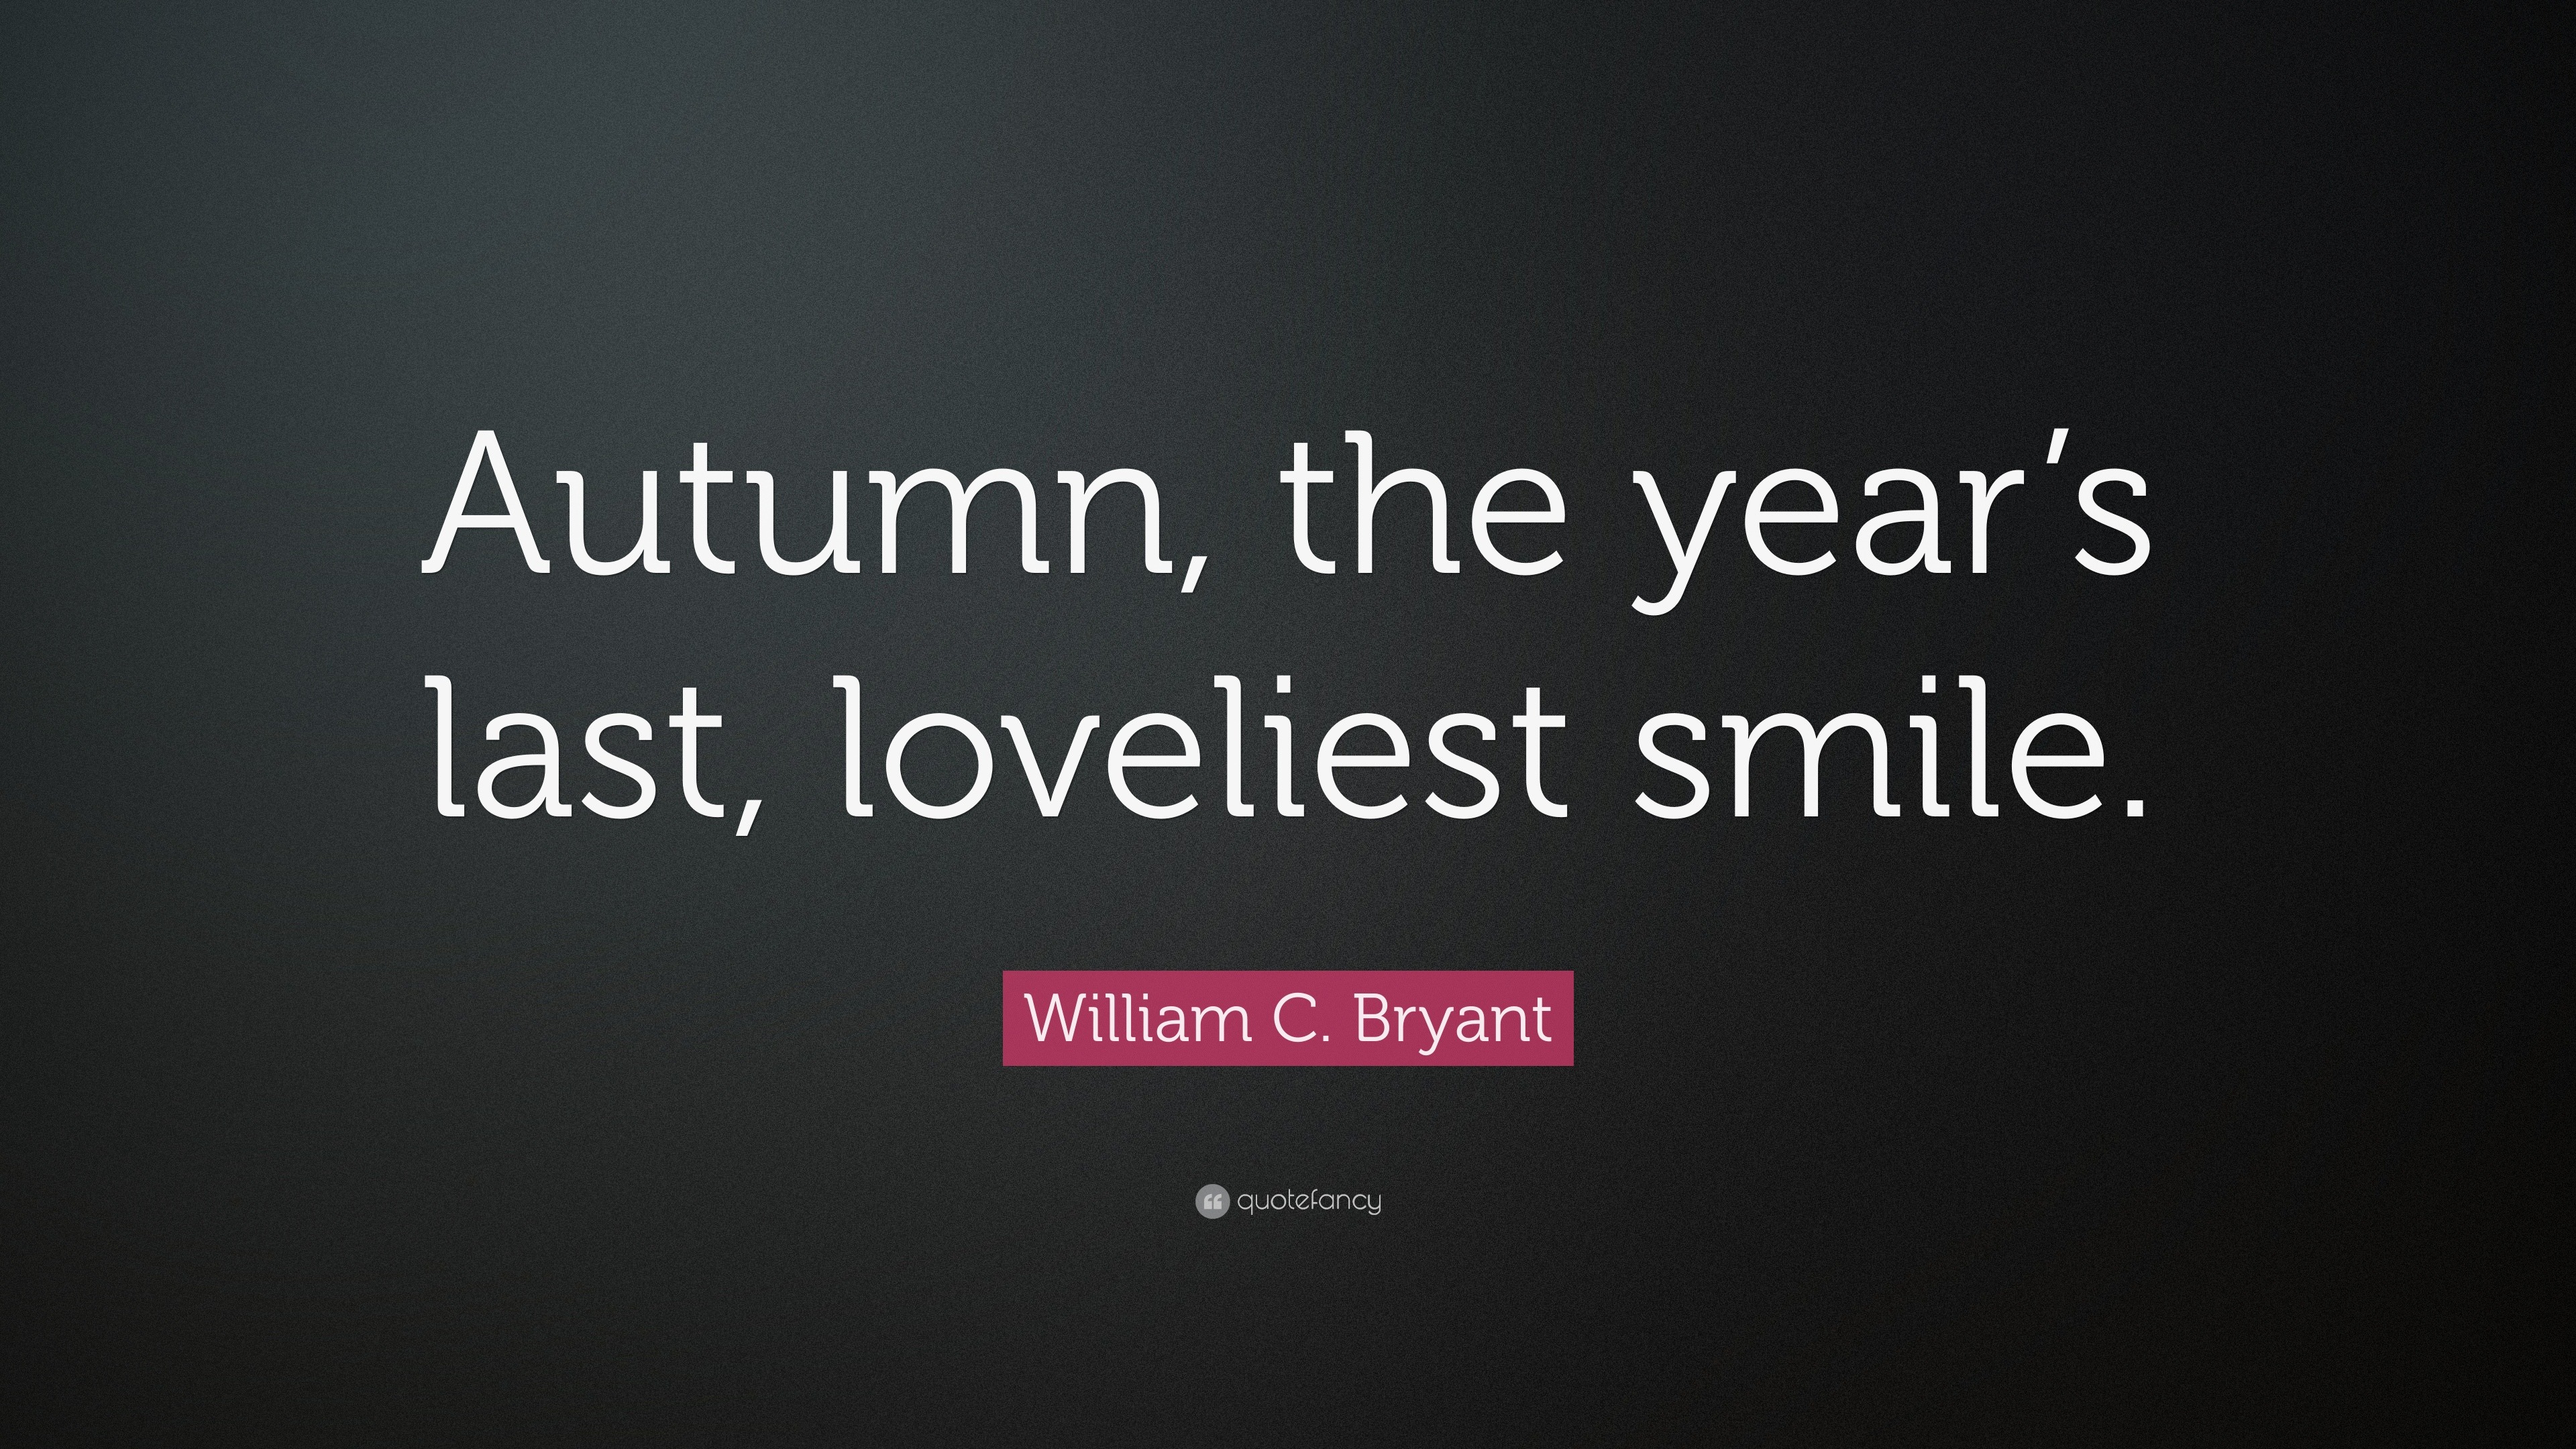 William C. Bryant Quote: “Autumn, the year’s last, loveliest smile.”